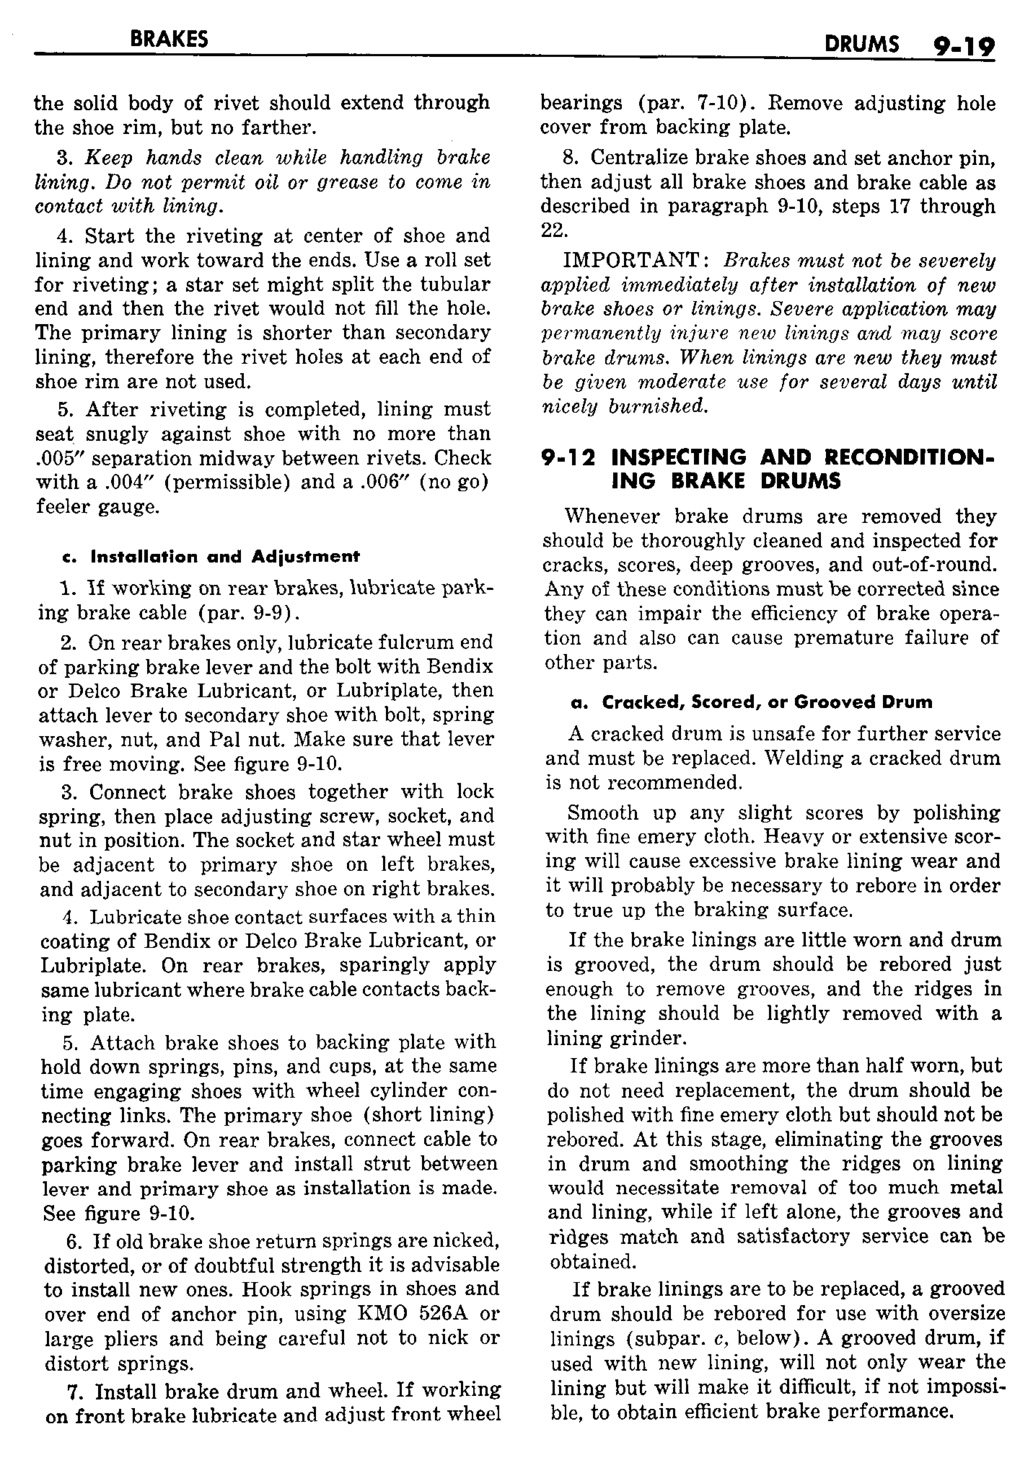 n_10 1959 Buick Shop Manual - Brakes-019-019.jpg